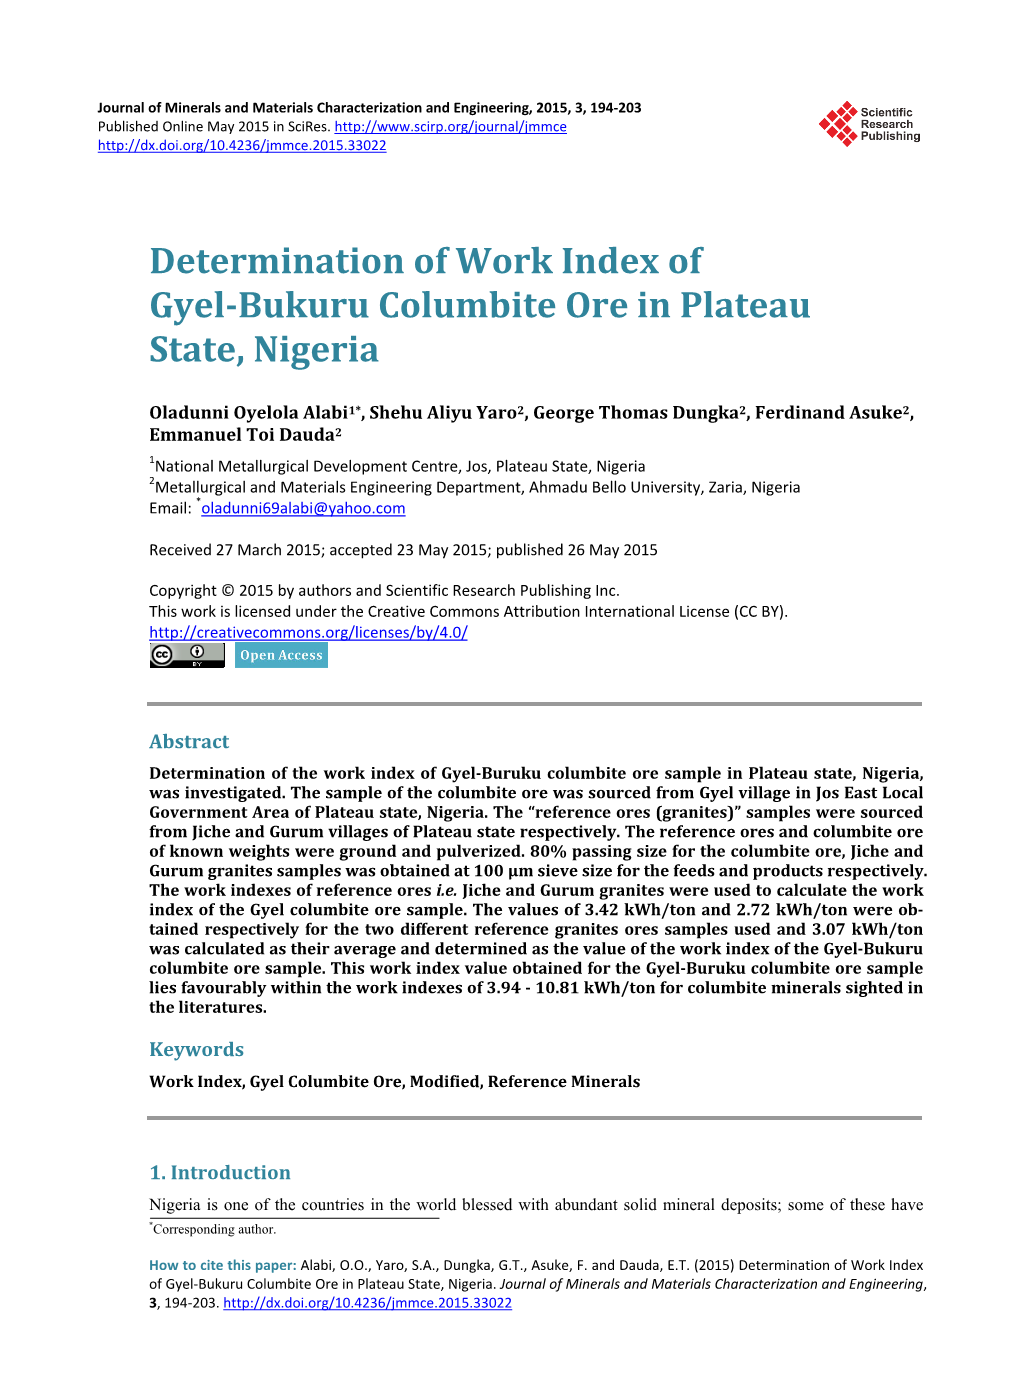 Determination of Work Index of Gyel-Bukuru Columbite Ore in Plateau State, Nigeria